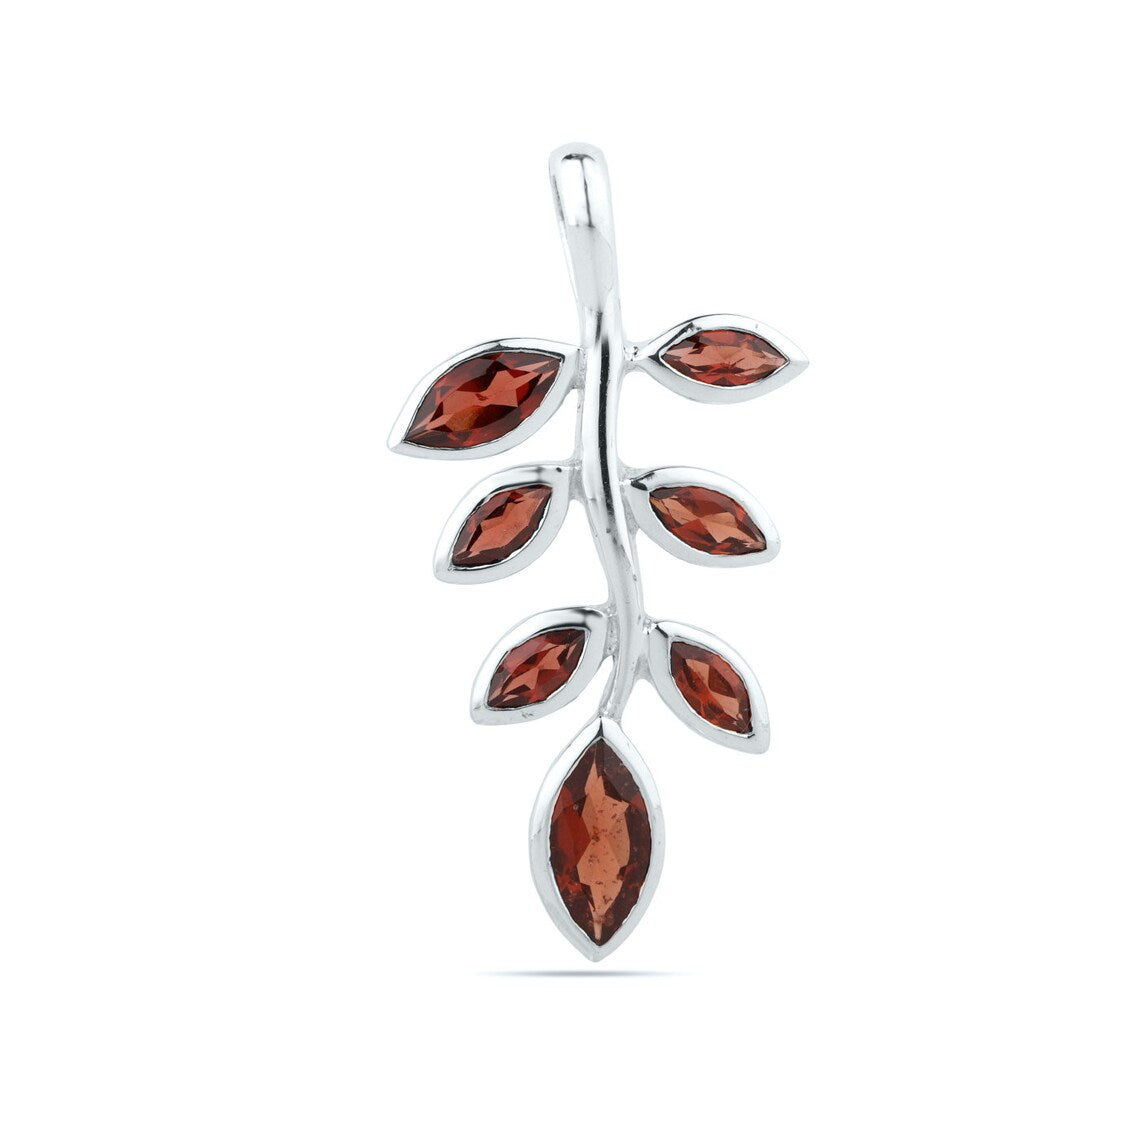 Garnet Leaf Pendant, Natural Garnet December Birthstone, Handmade Sterling Silver Dainty Charm Necklace,Minimalist Jewelry For Gifting Women